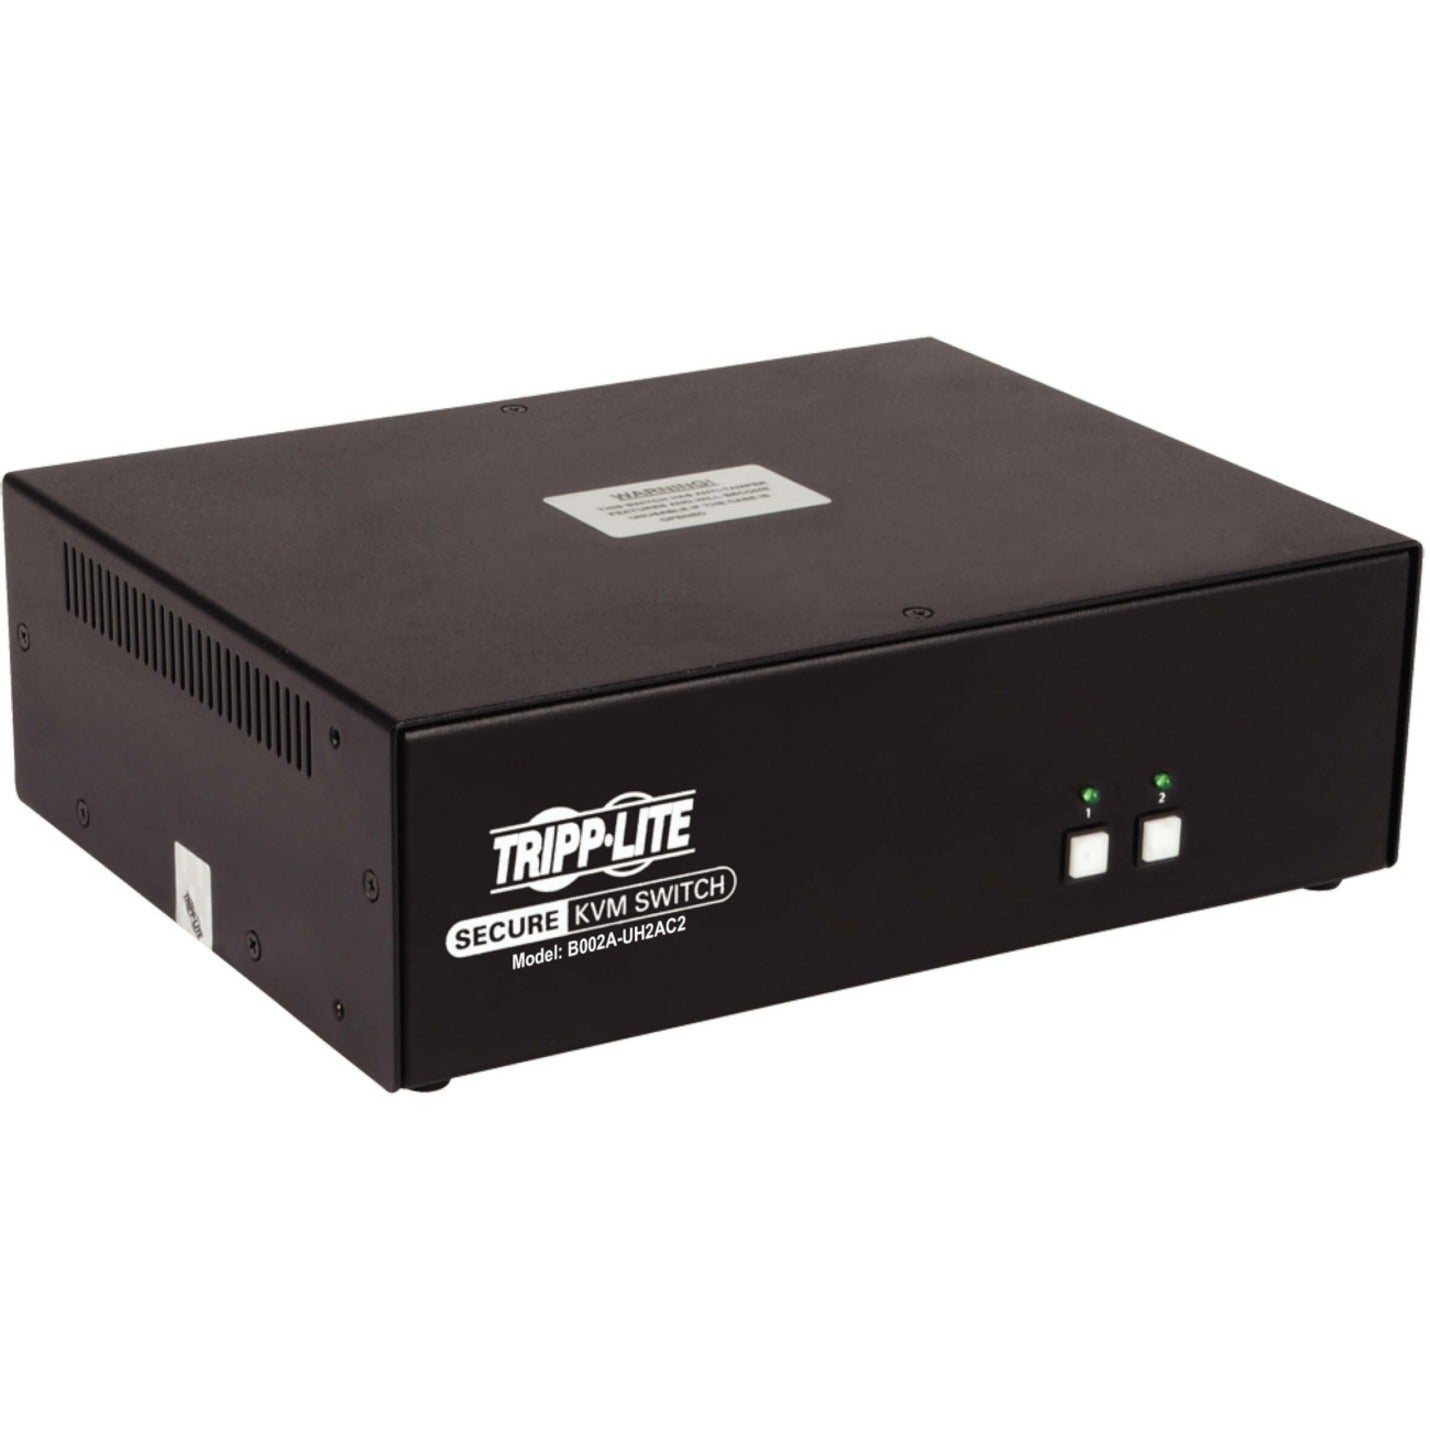 Tripp Lite B002A-UH2AC2 2-Port Doppio-Monitor Sicuro KVM Switch HDMI - 4K NIAP PP3.0 Audio CAC TAA